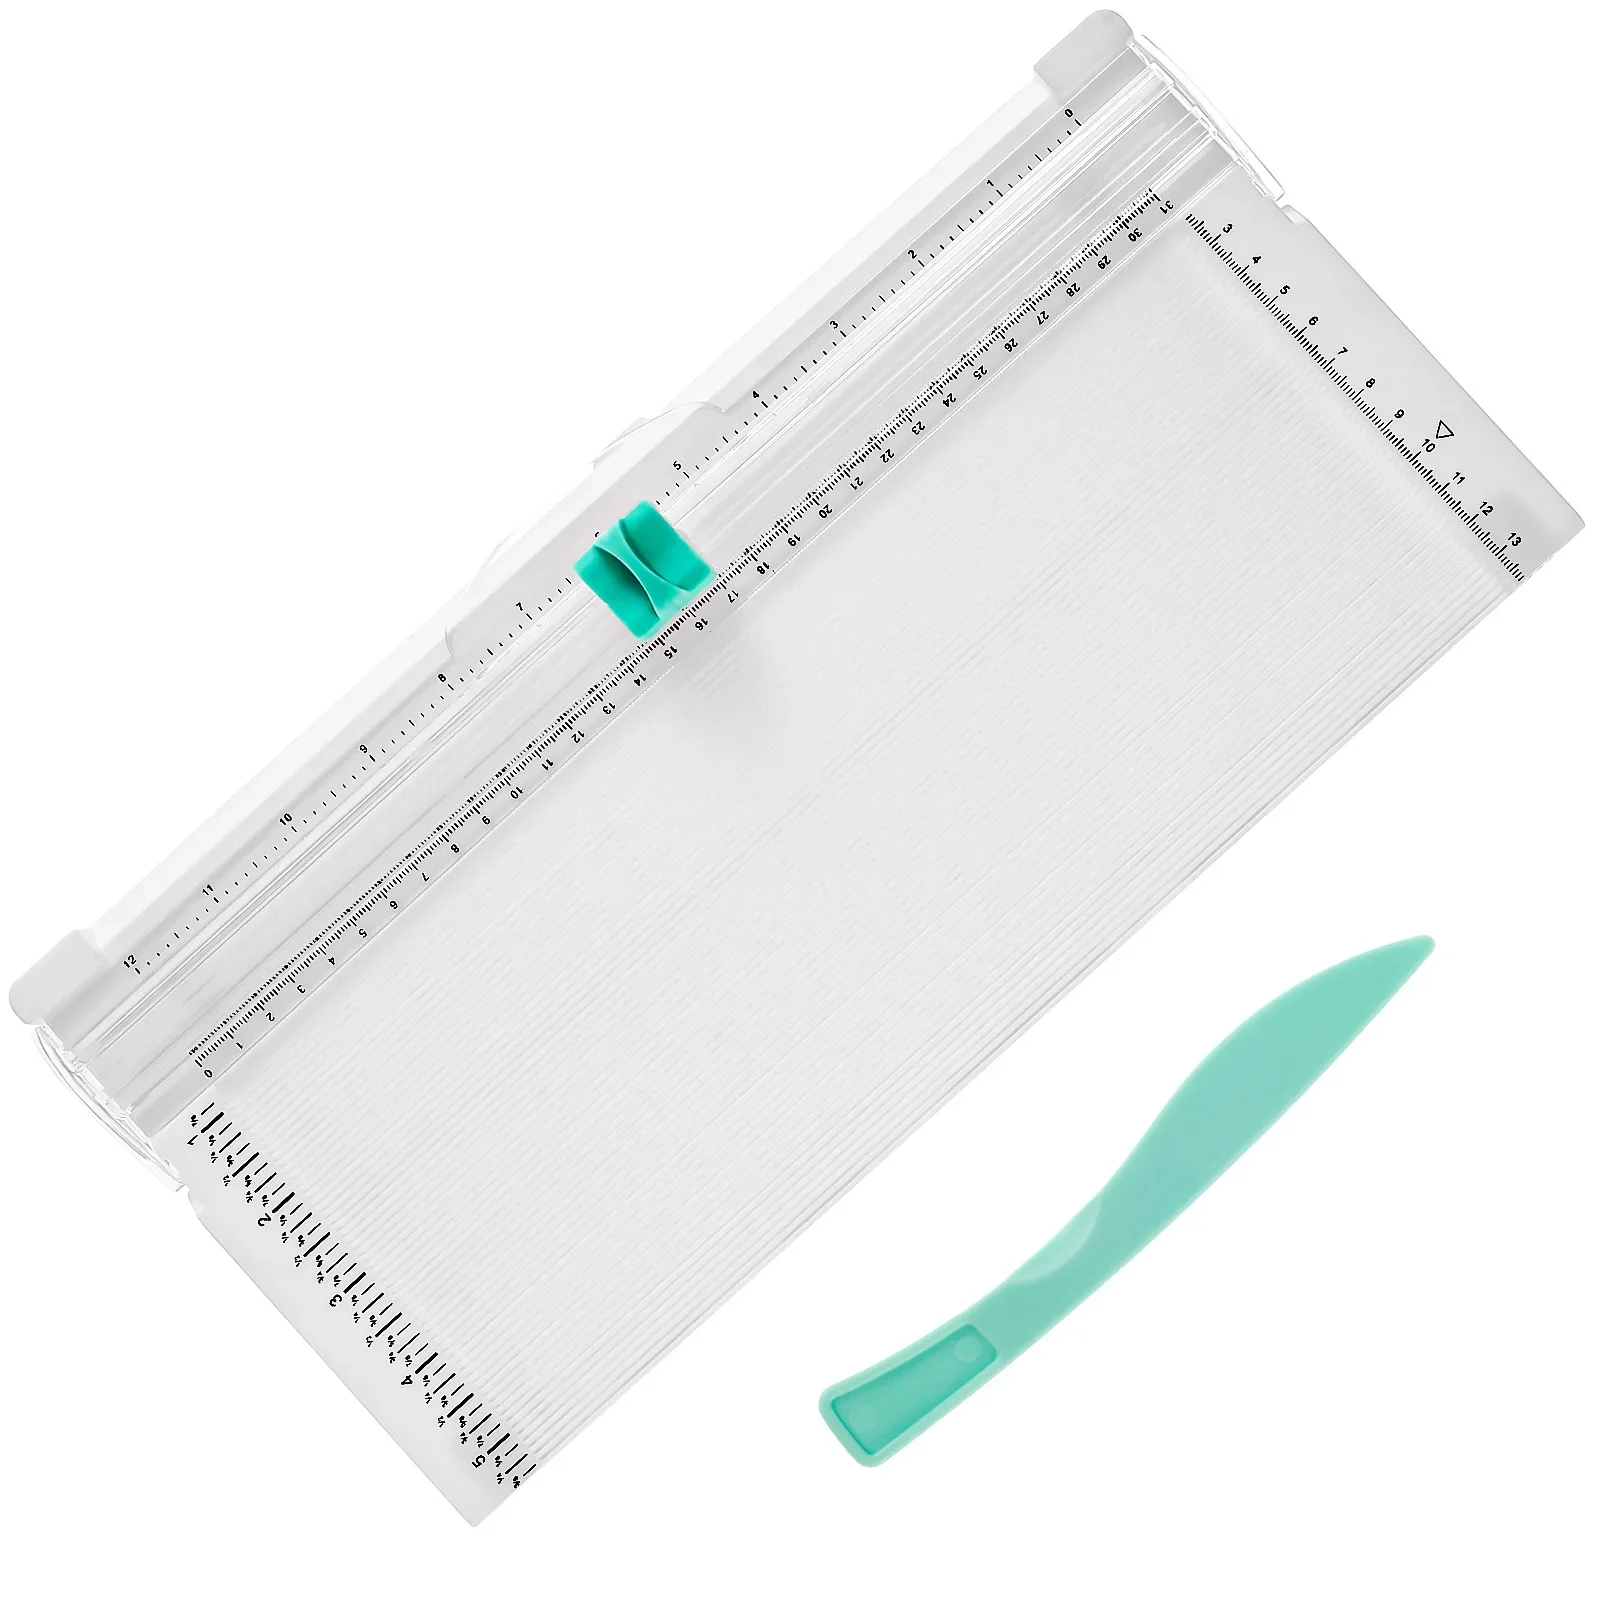  Доска для подсчета очков для обрезки бумаги Craft Paper Cutter Folding Scorer для DIY Scrapbook Card Photo Paper Cutting Machine 36x35cm